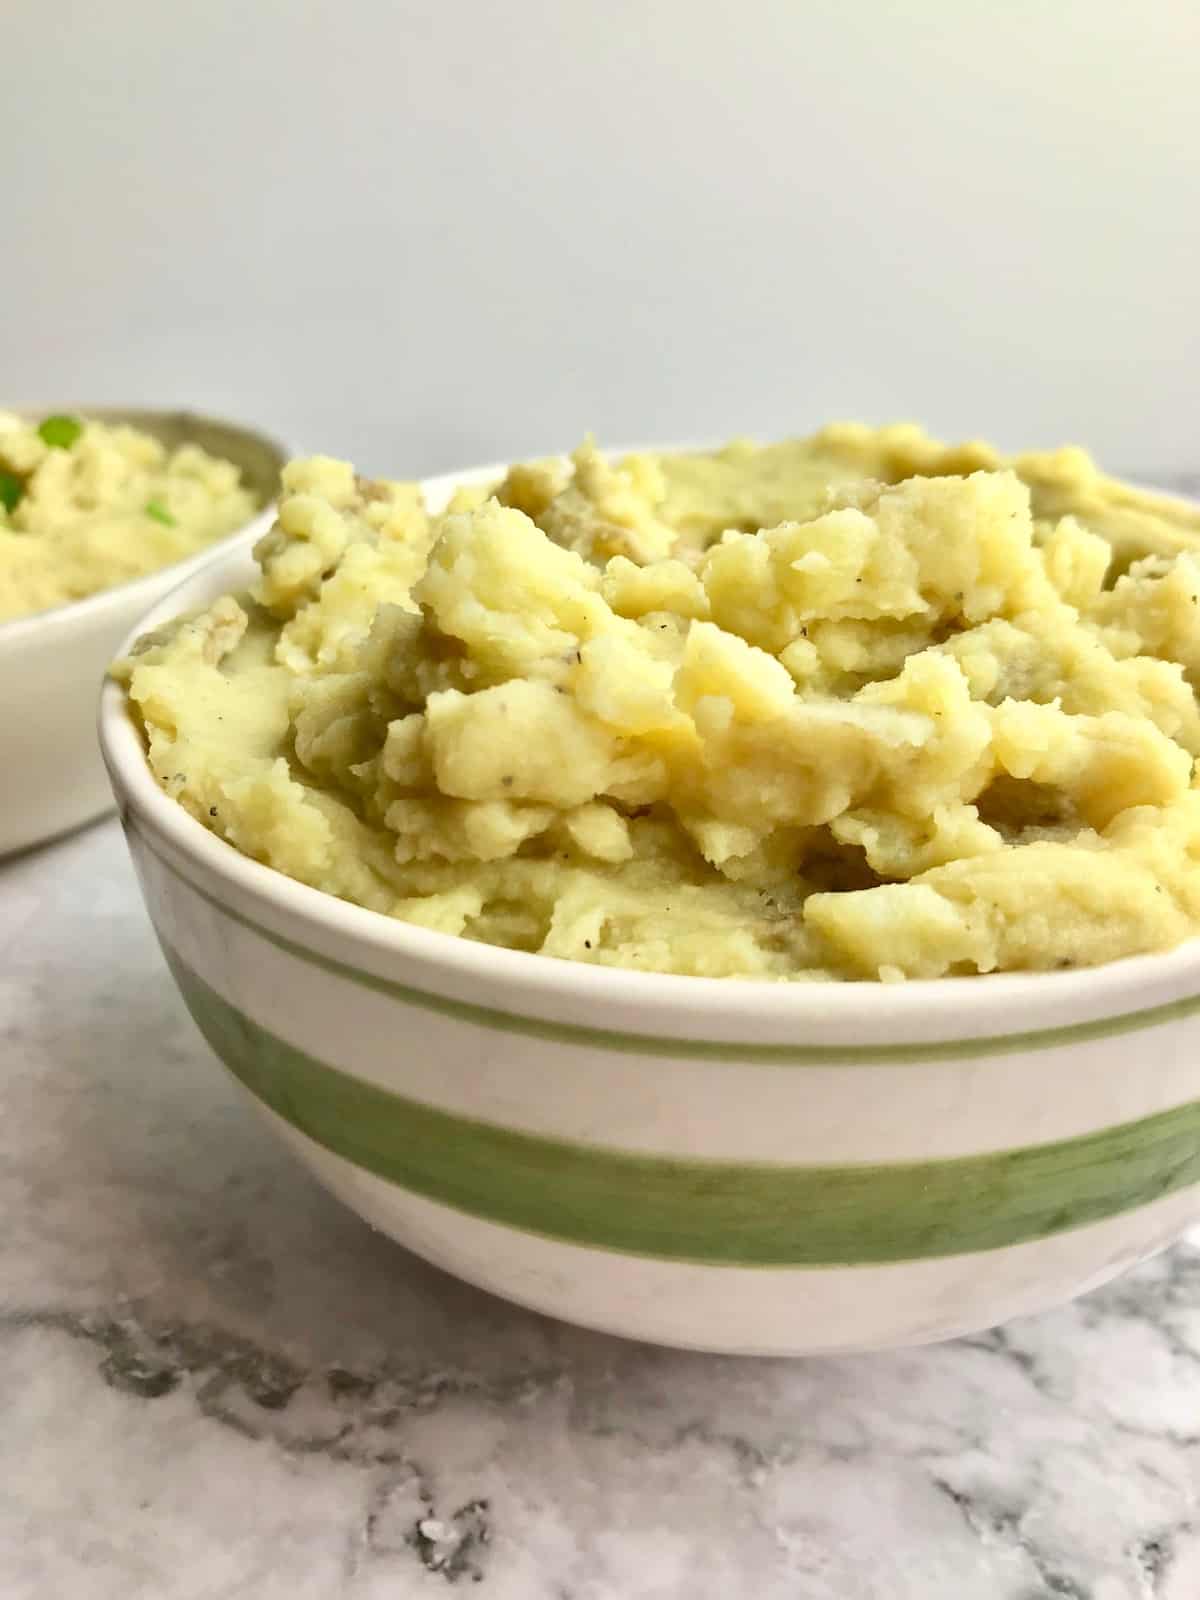 A bowl of vegan yellow mashed potatoes.